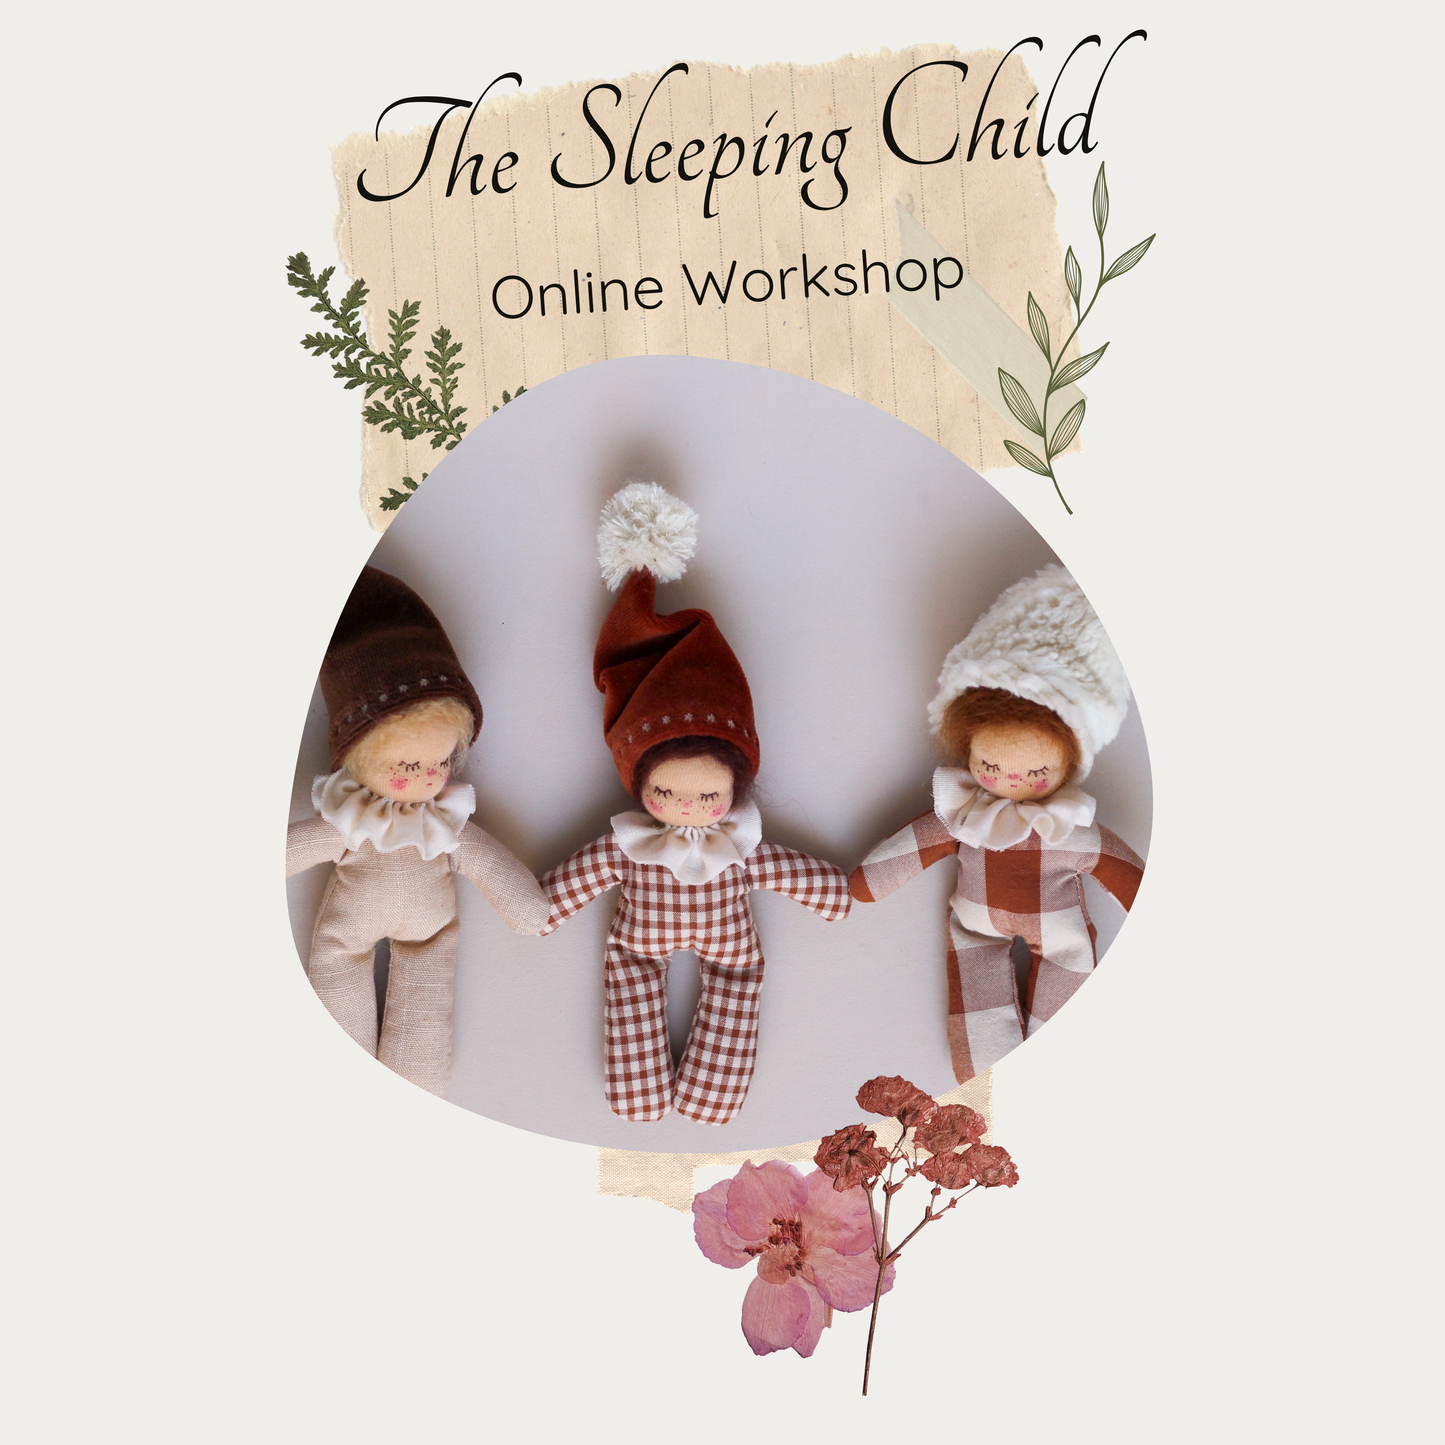 The Sleeping Child workshop